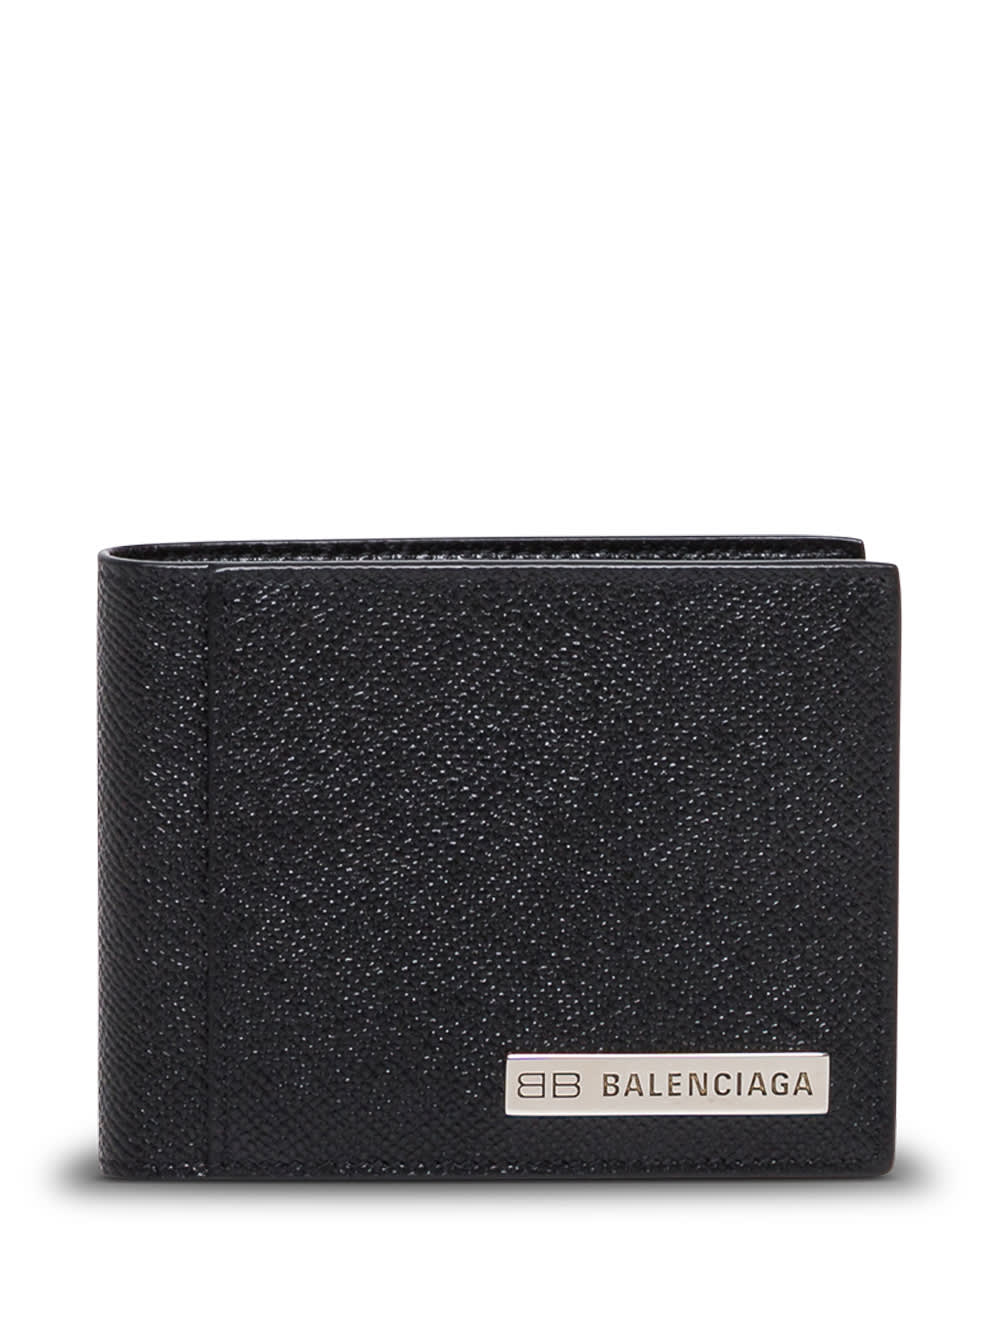 Balenciaga Black Leather Wallet With Logo Plate